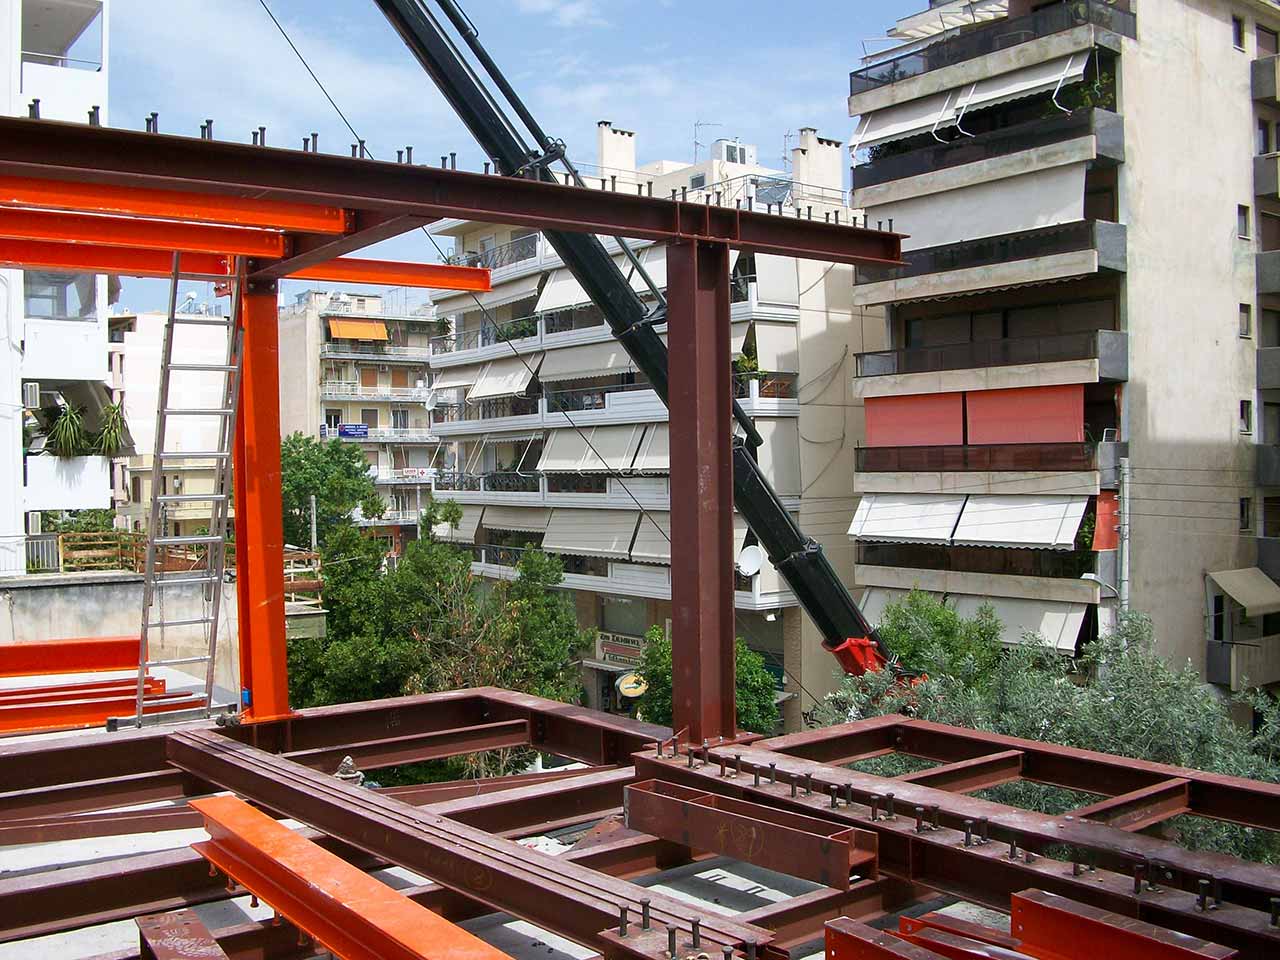 Upper floor extensions with metal construction